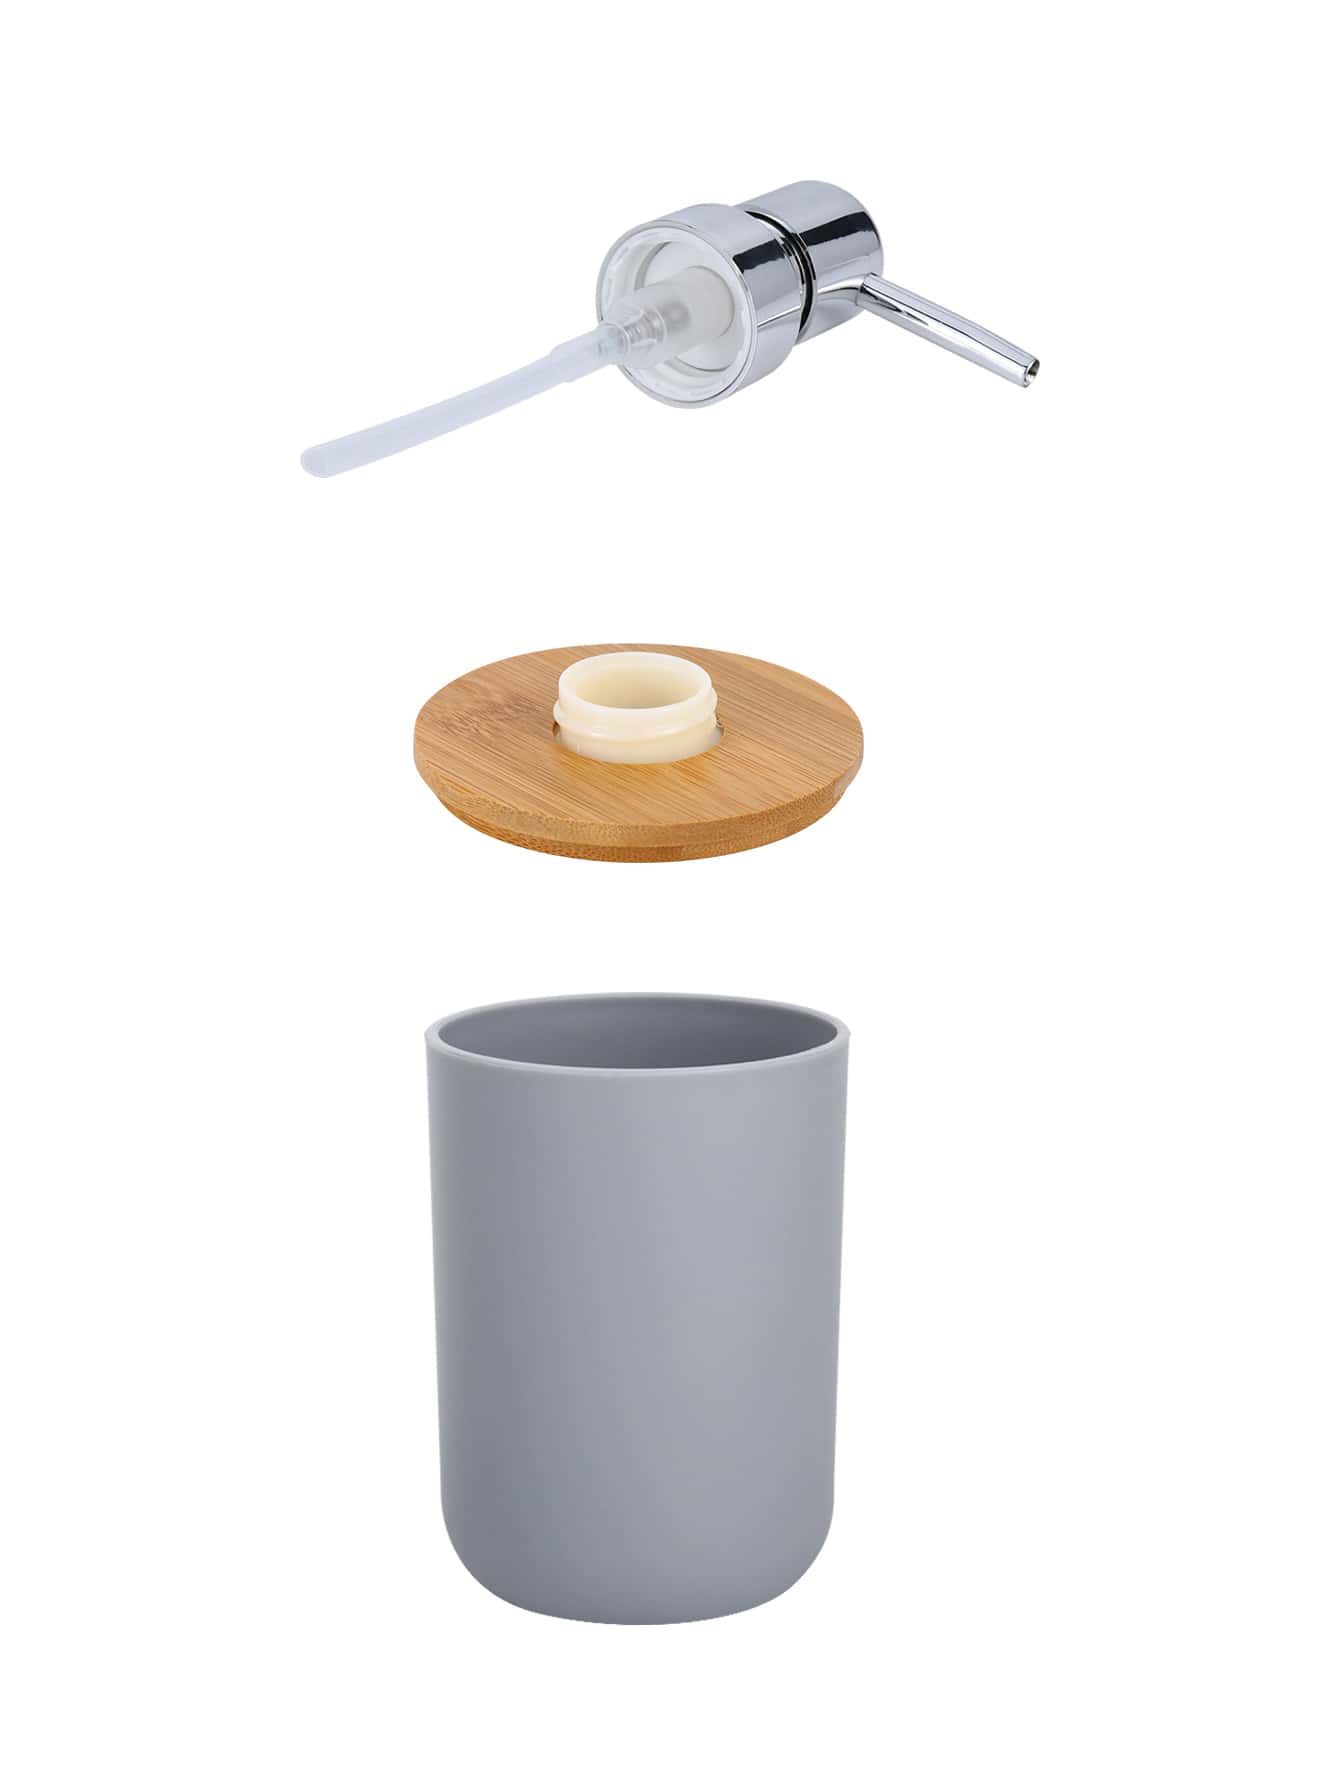 4pcs Lotion Dispenser Soap Dish Holder Gargle Cup Set